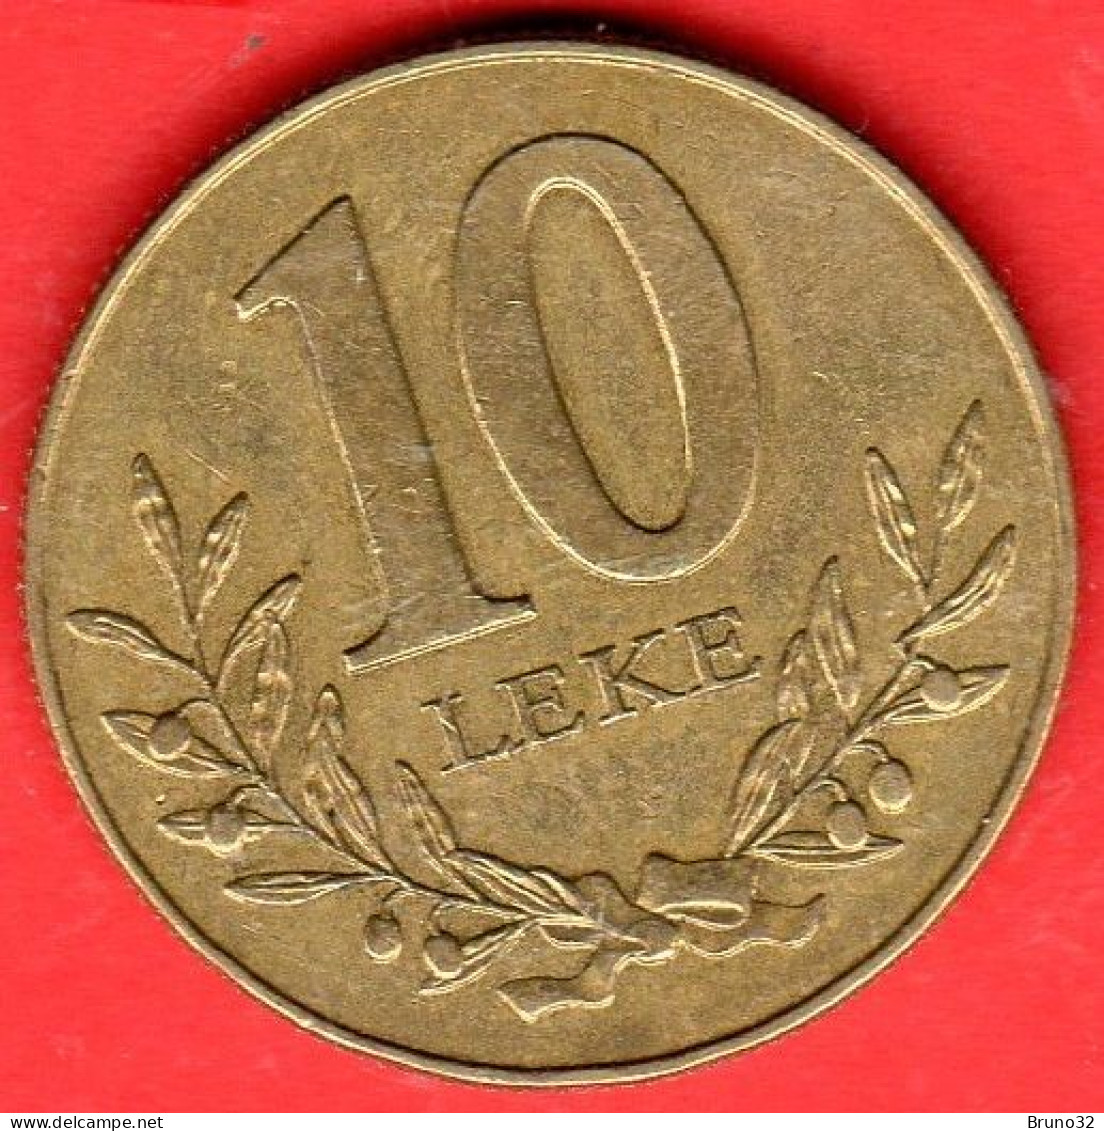 Albania - Albanie - Shqipëria - 1996 - 10 Leke - SPL/XF - Come Da Foto - Albania